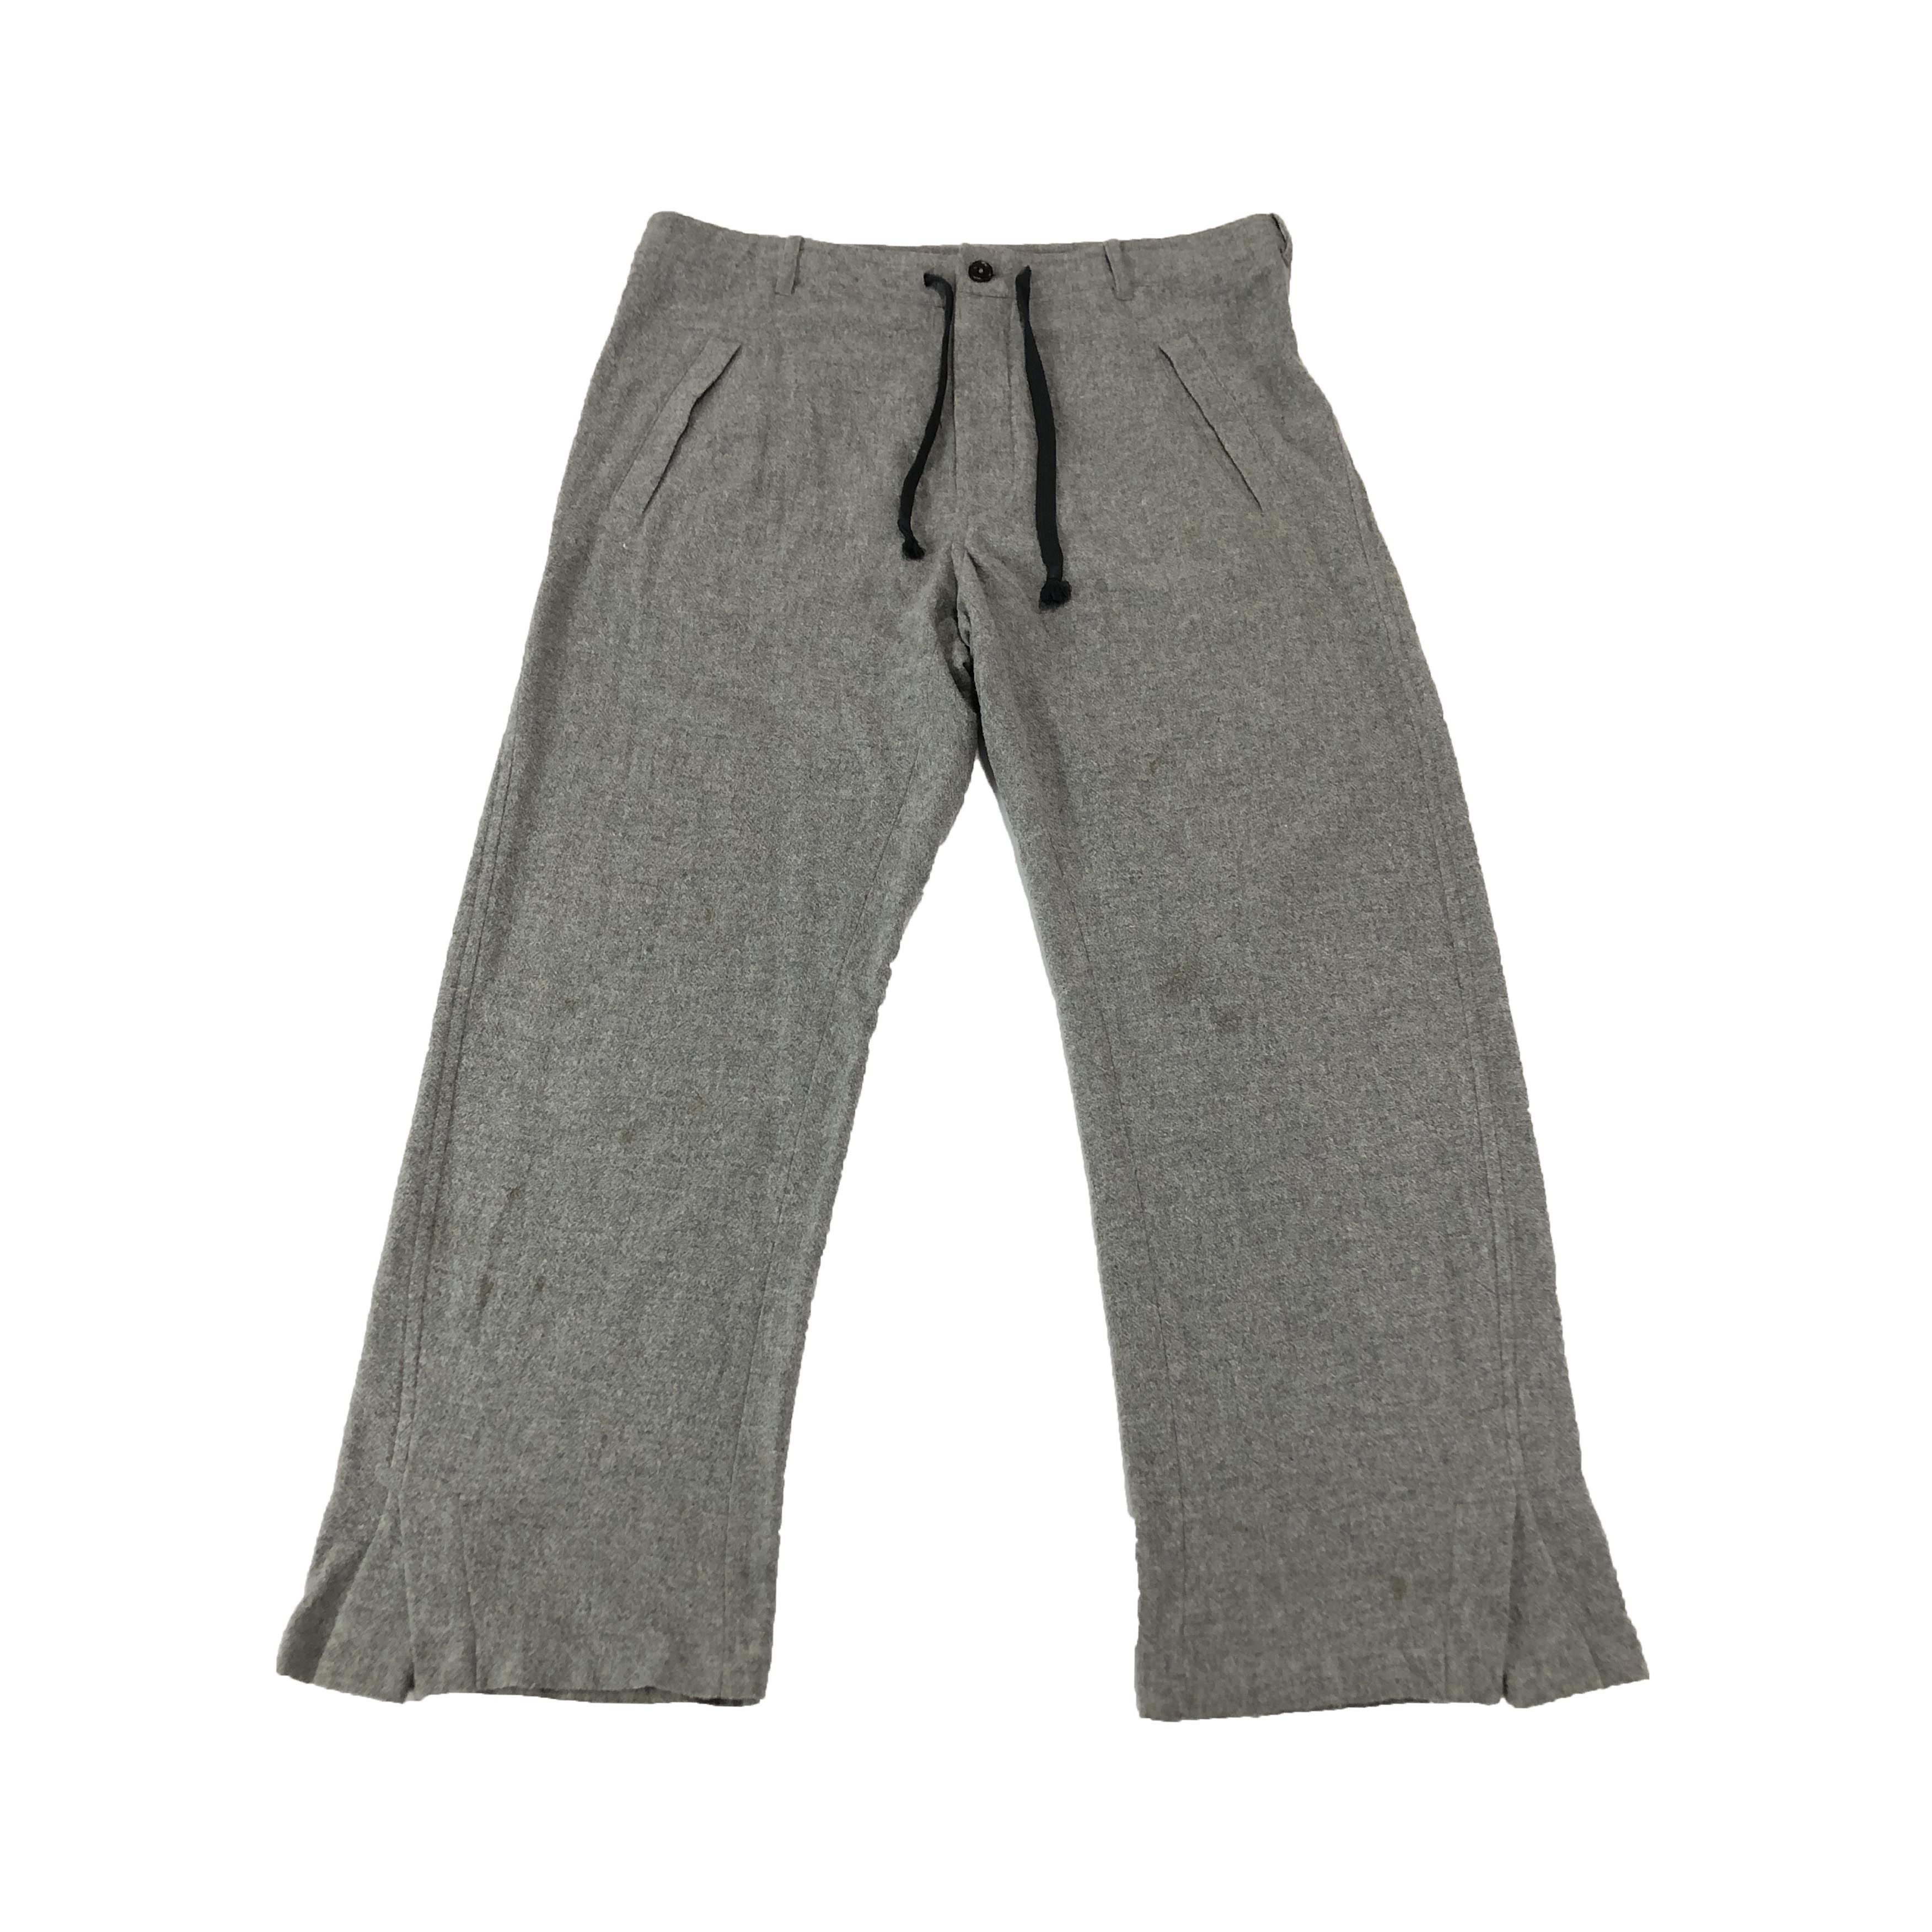 [Ann Demeulemeester] Grey Pants - Size M